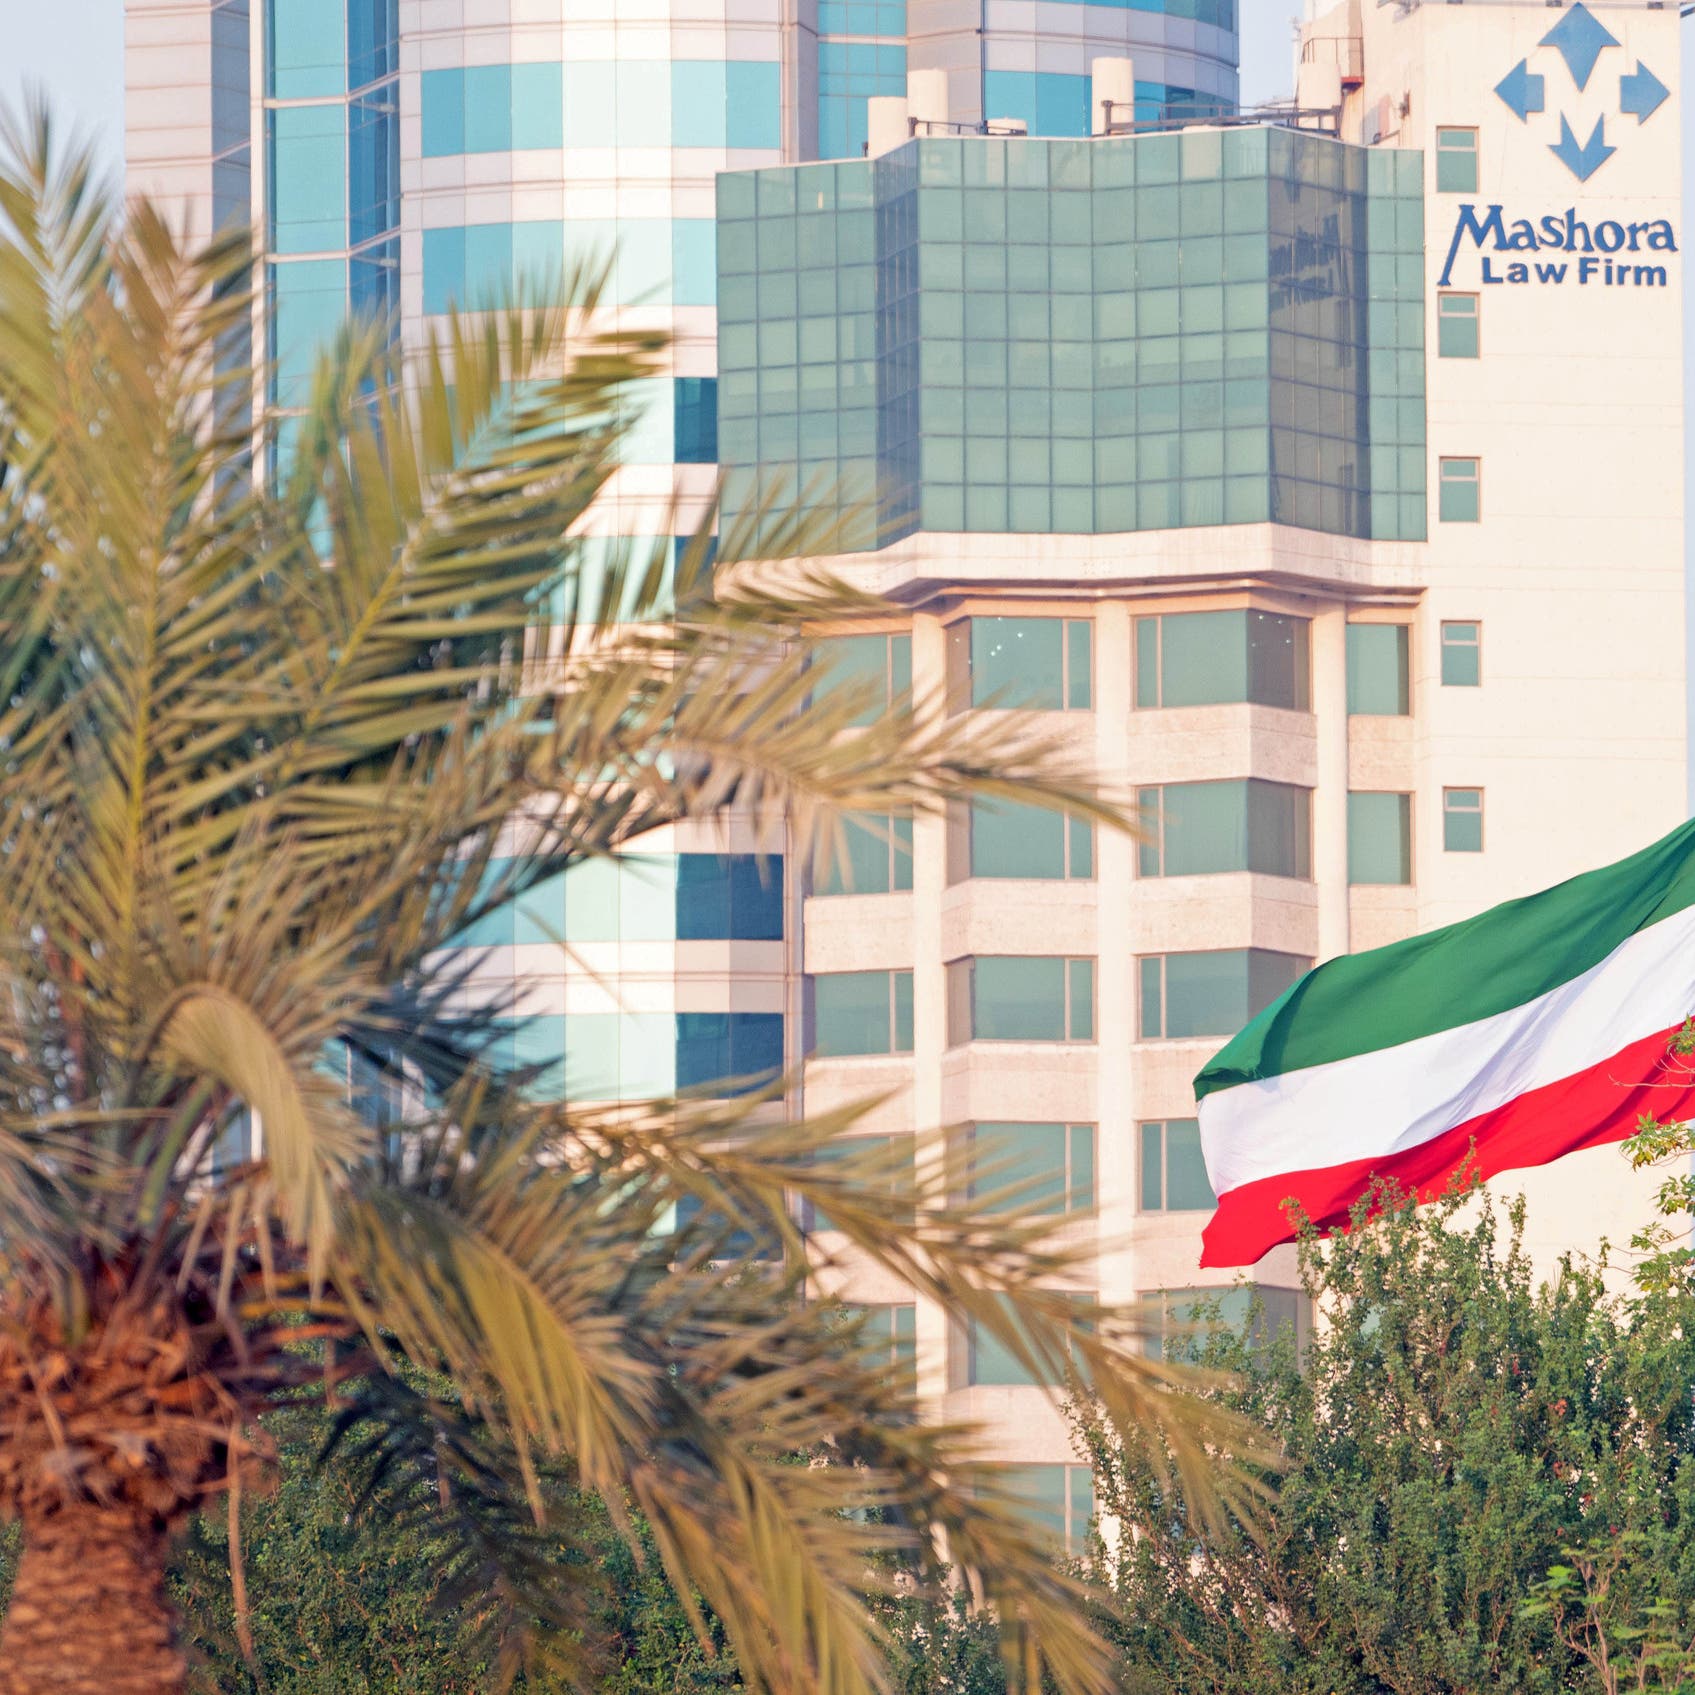 "S&P": حدوث تغييرات فورية لسياسة الكويت المالية مستبعد